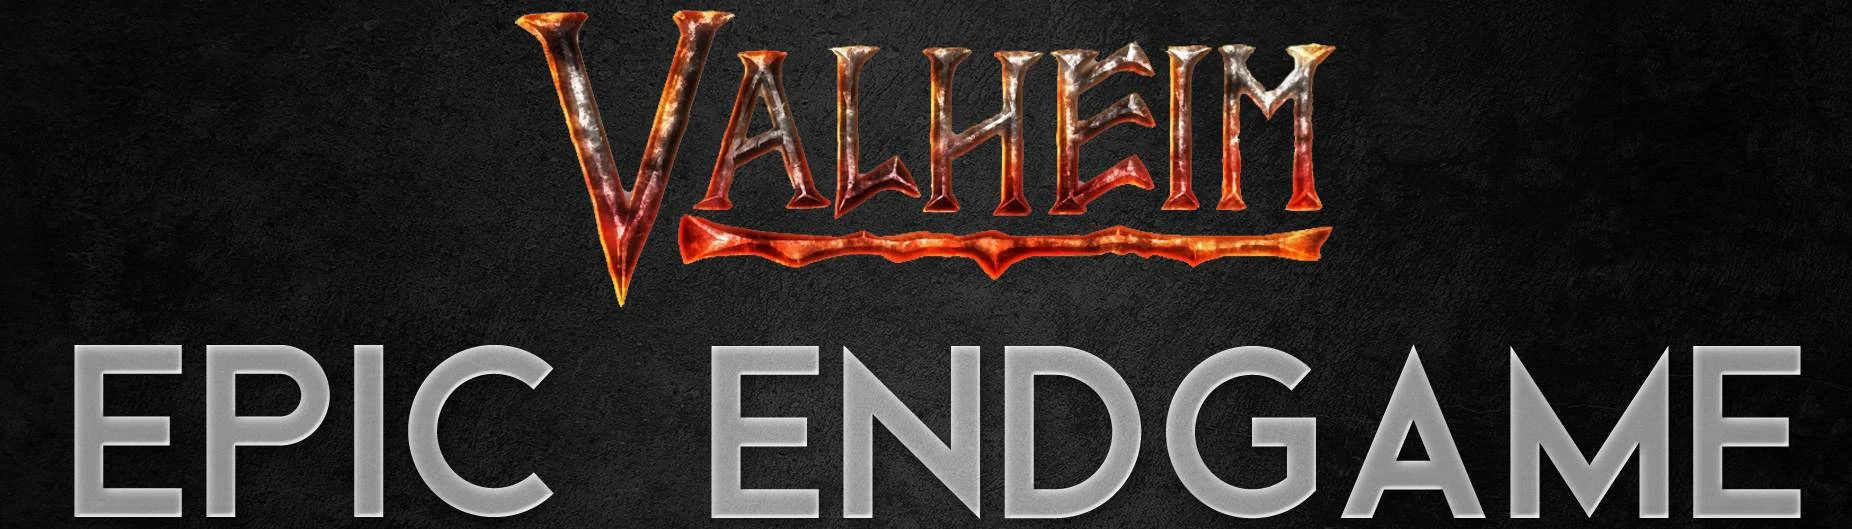 Epic Endgame at Valheim Nexus - Mods and community